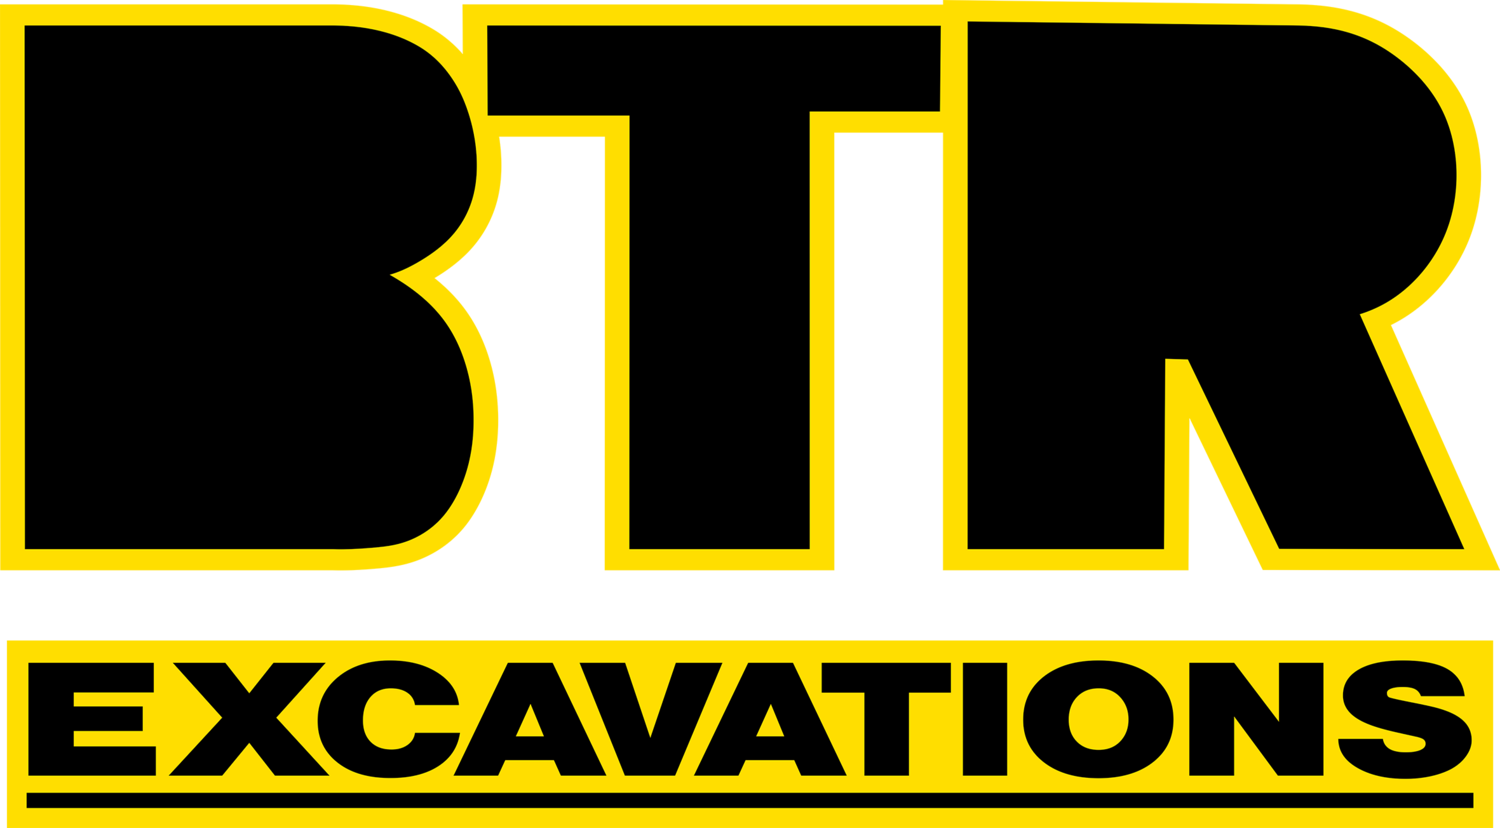 BTR Excavations